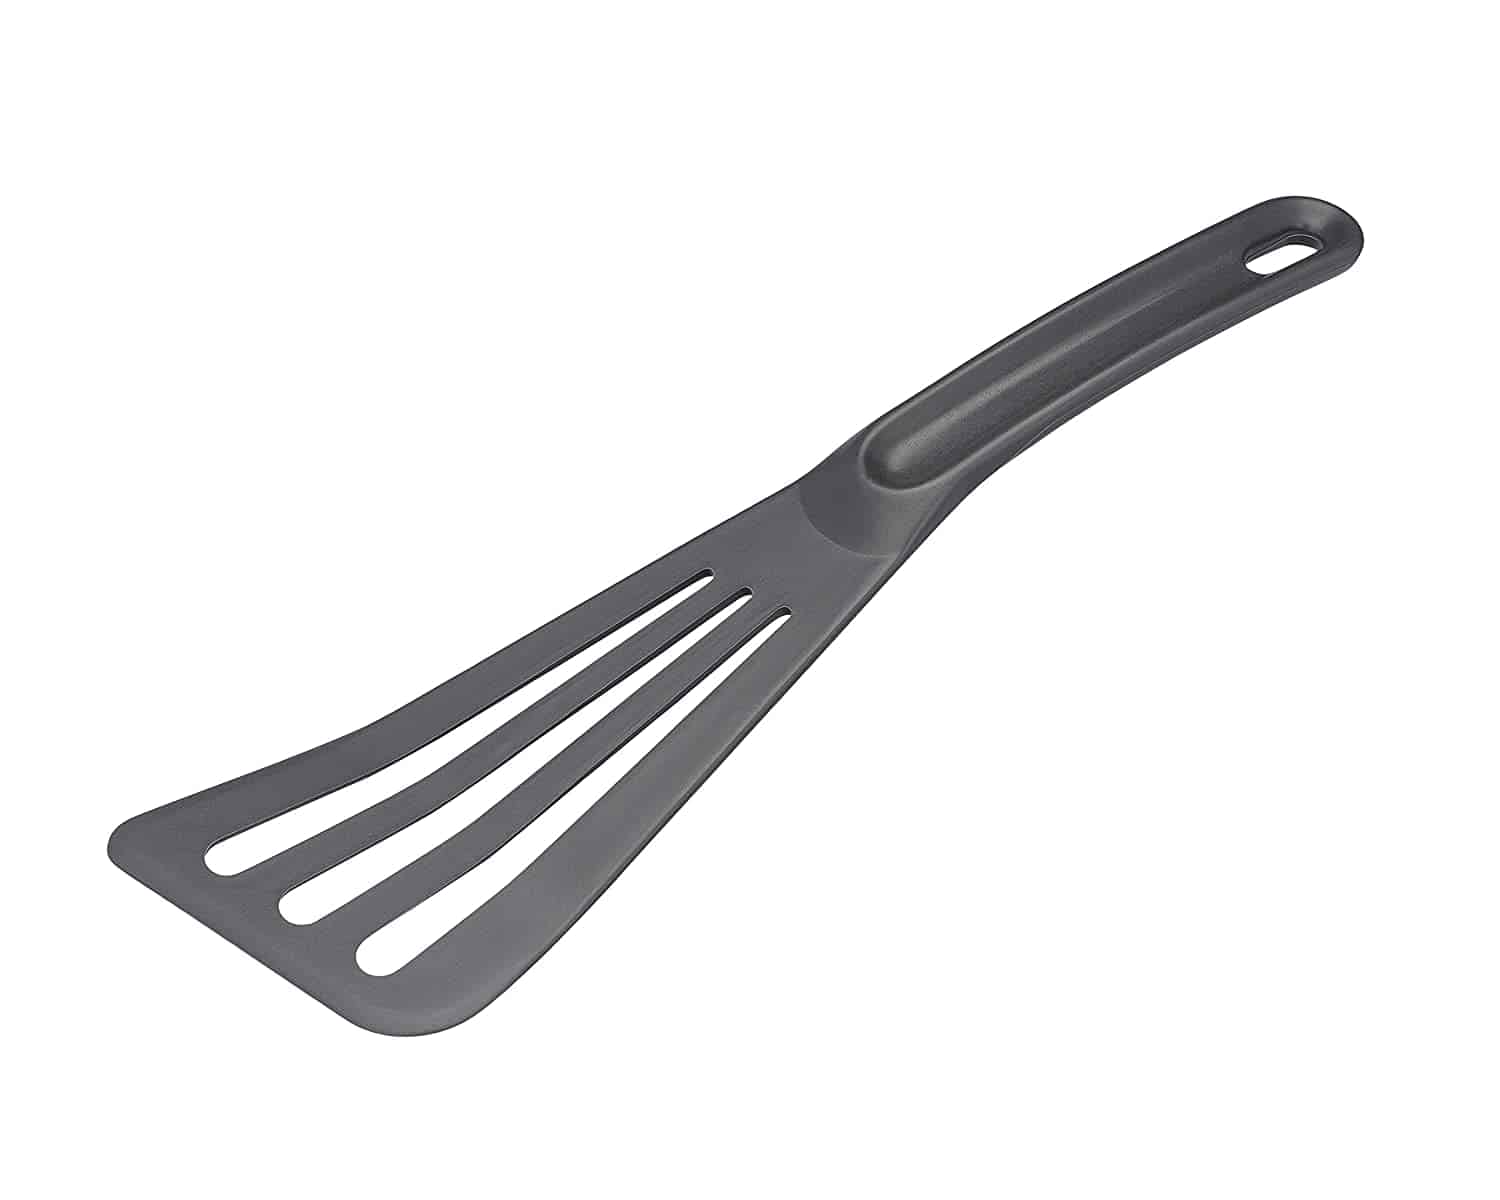 Best fish spatula for non-stick cookware- Matfer Bourgeat Exoglass Pelton